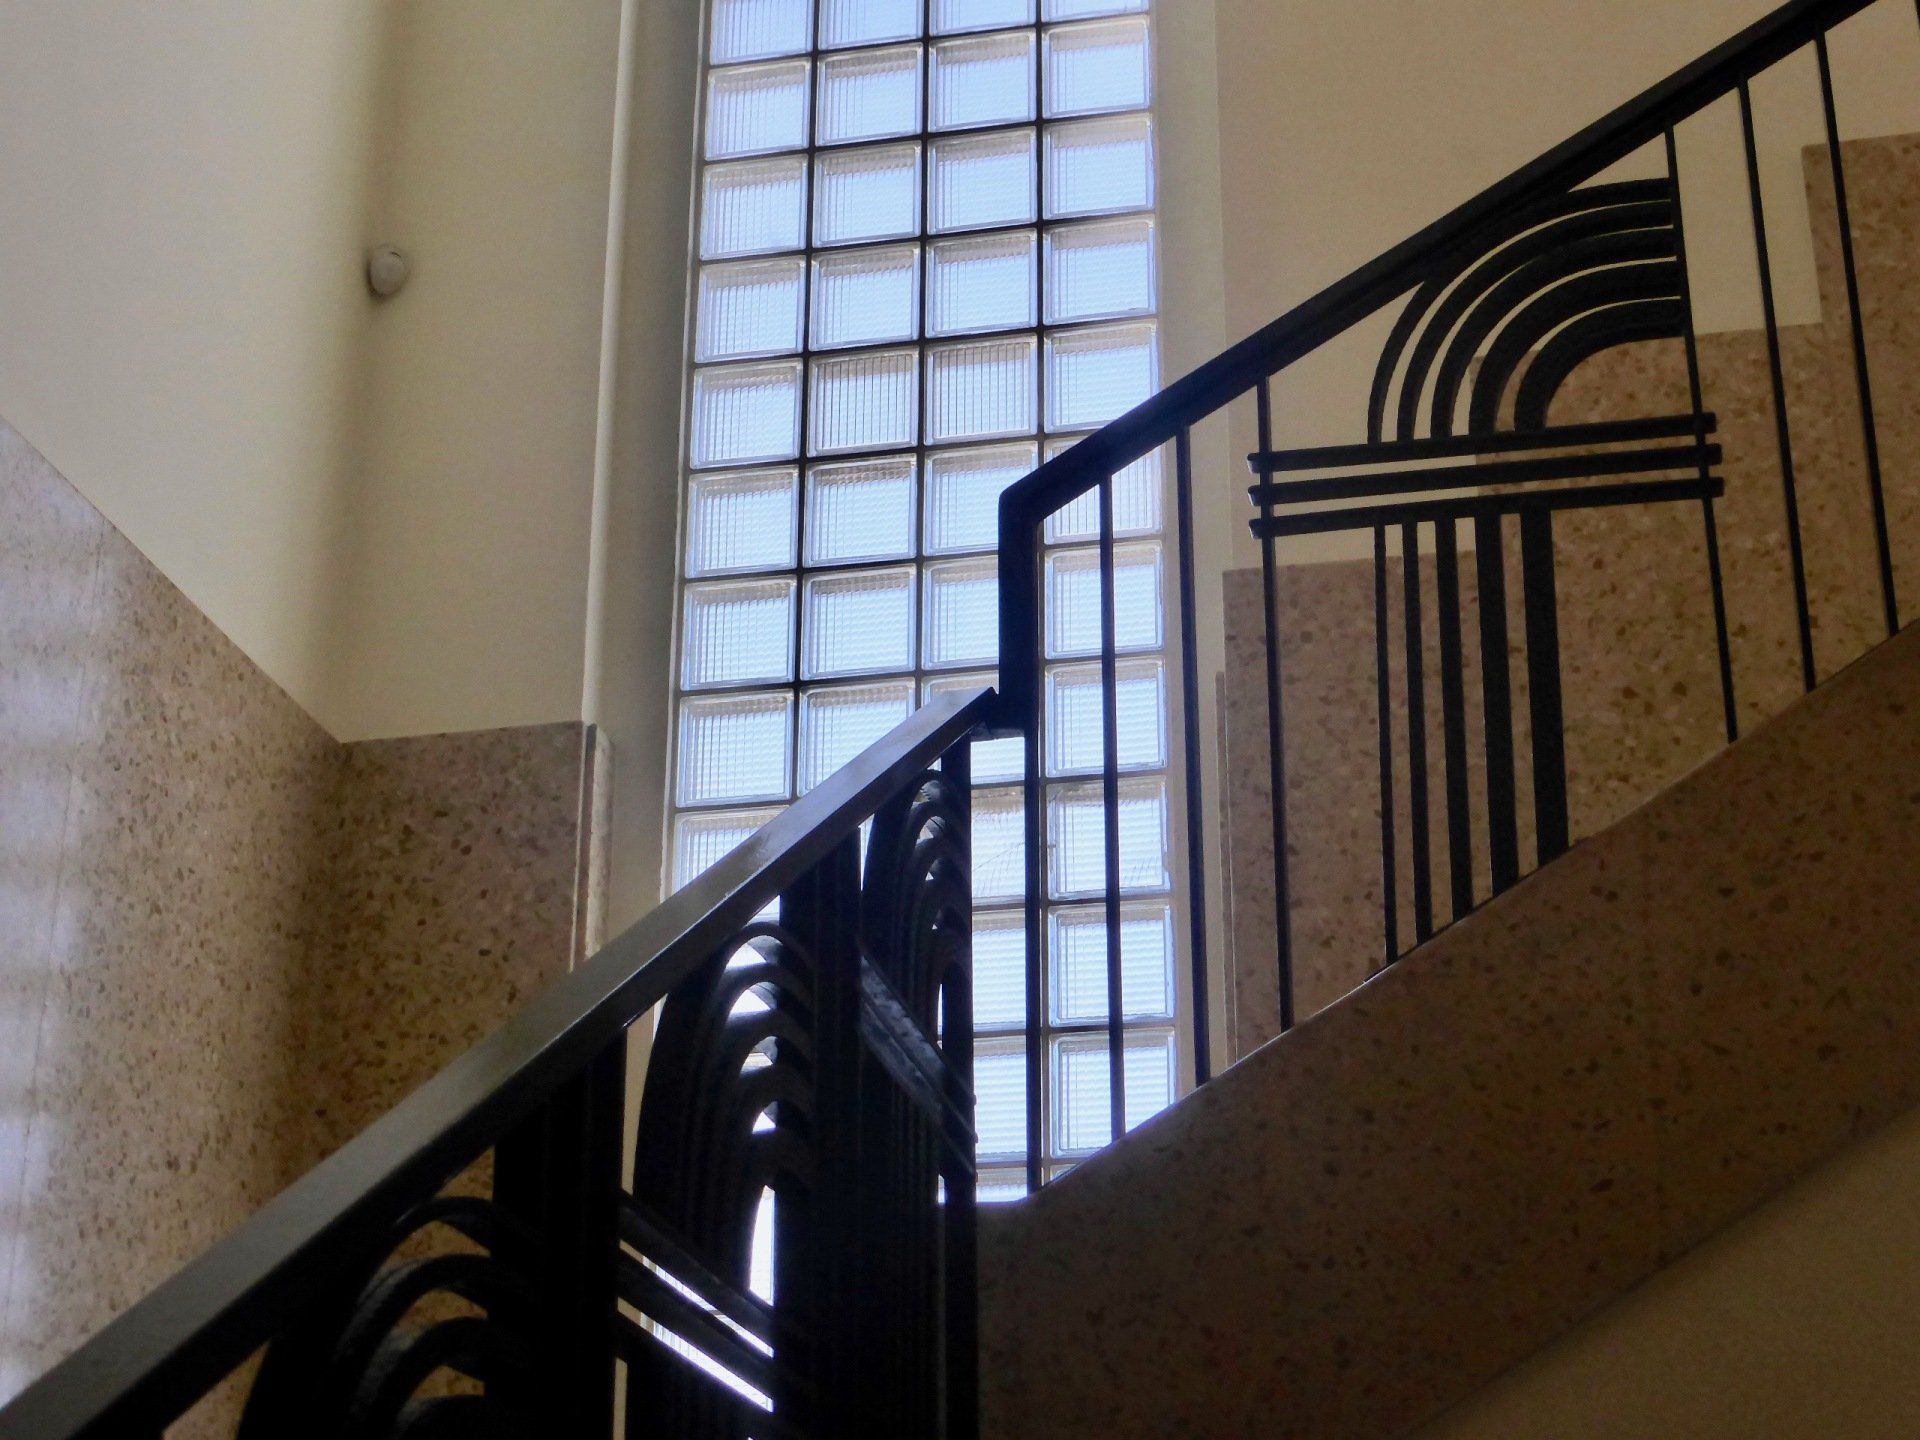 Escalier style Bauhaus Tel-Aviv